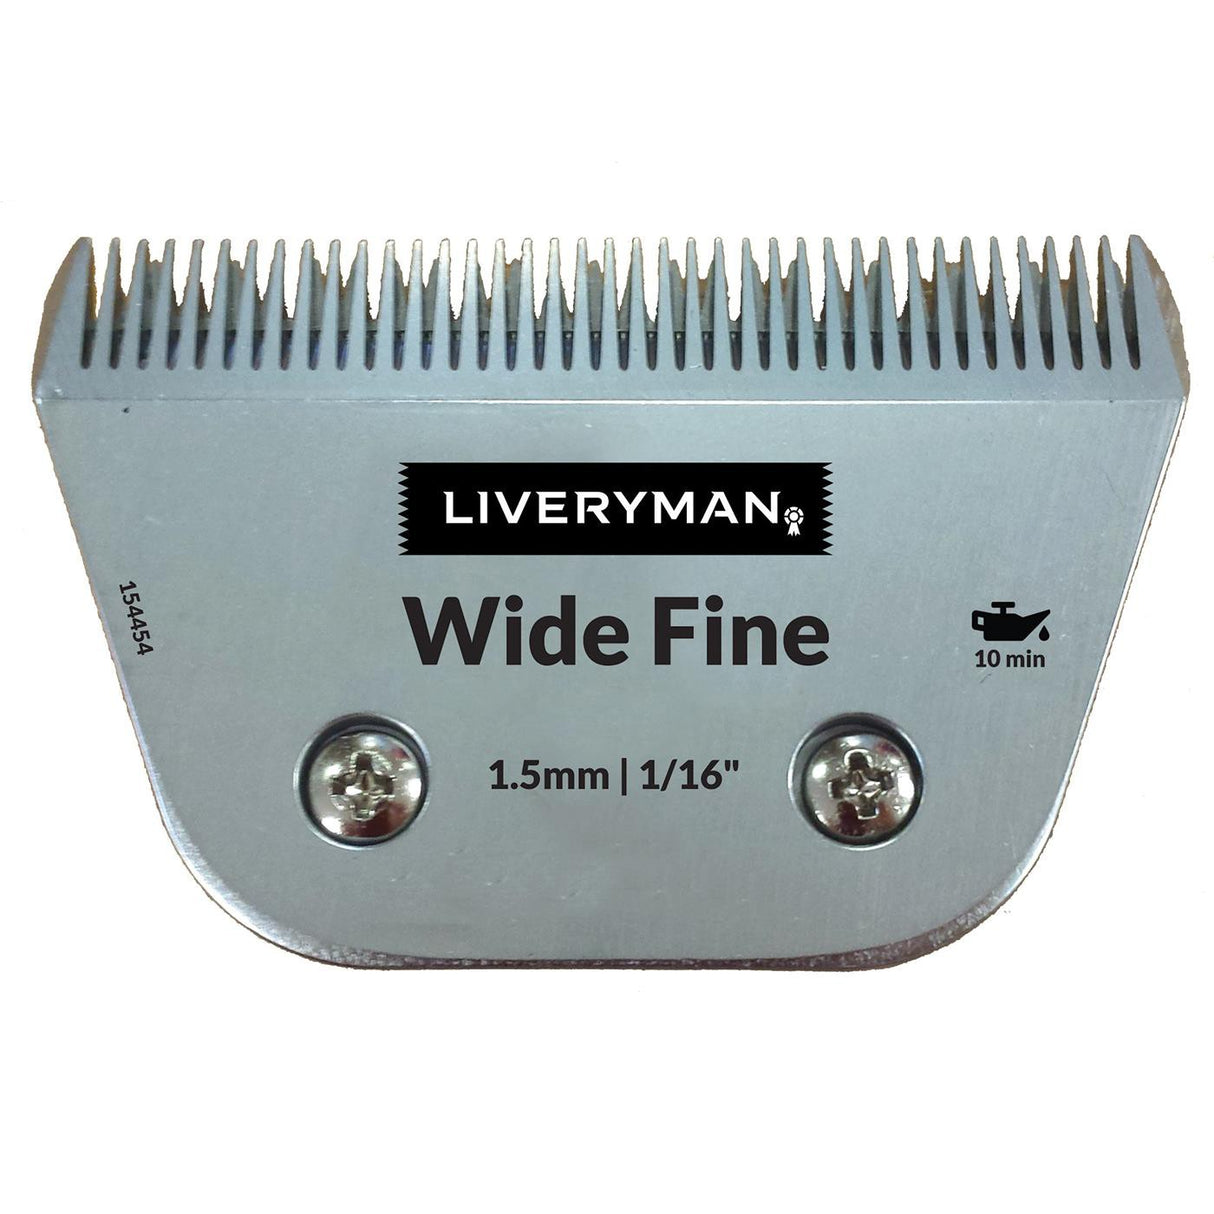 Liveryman Cutter & Comb Wide Fine 10W/1.5mm Blade